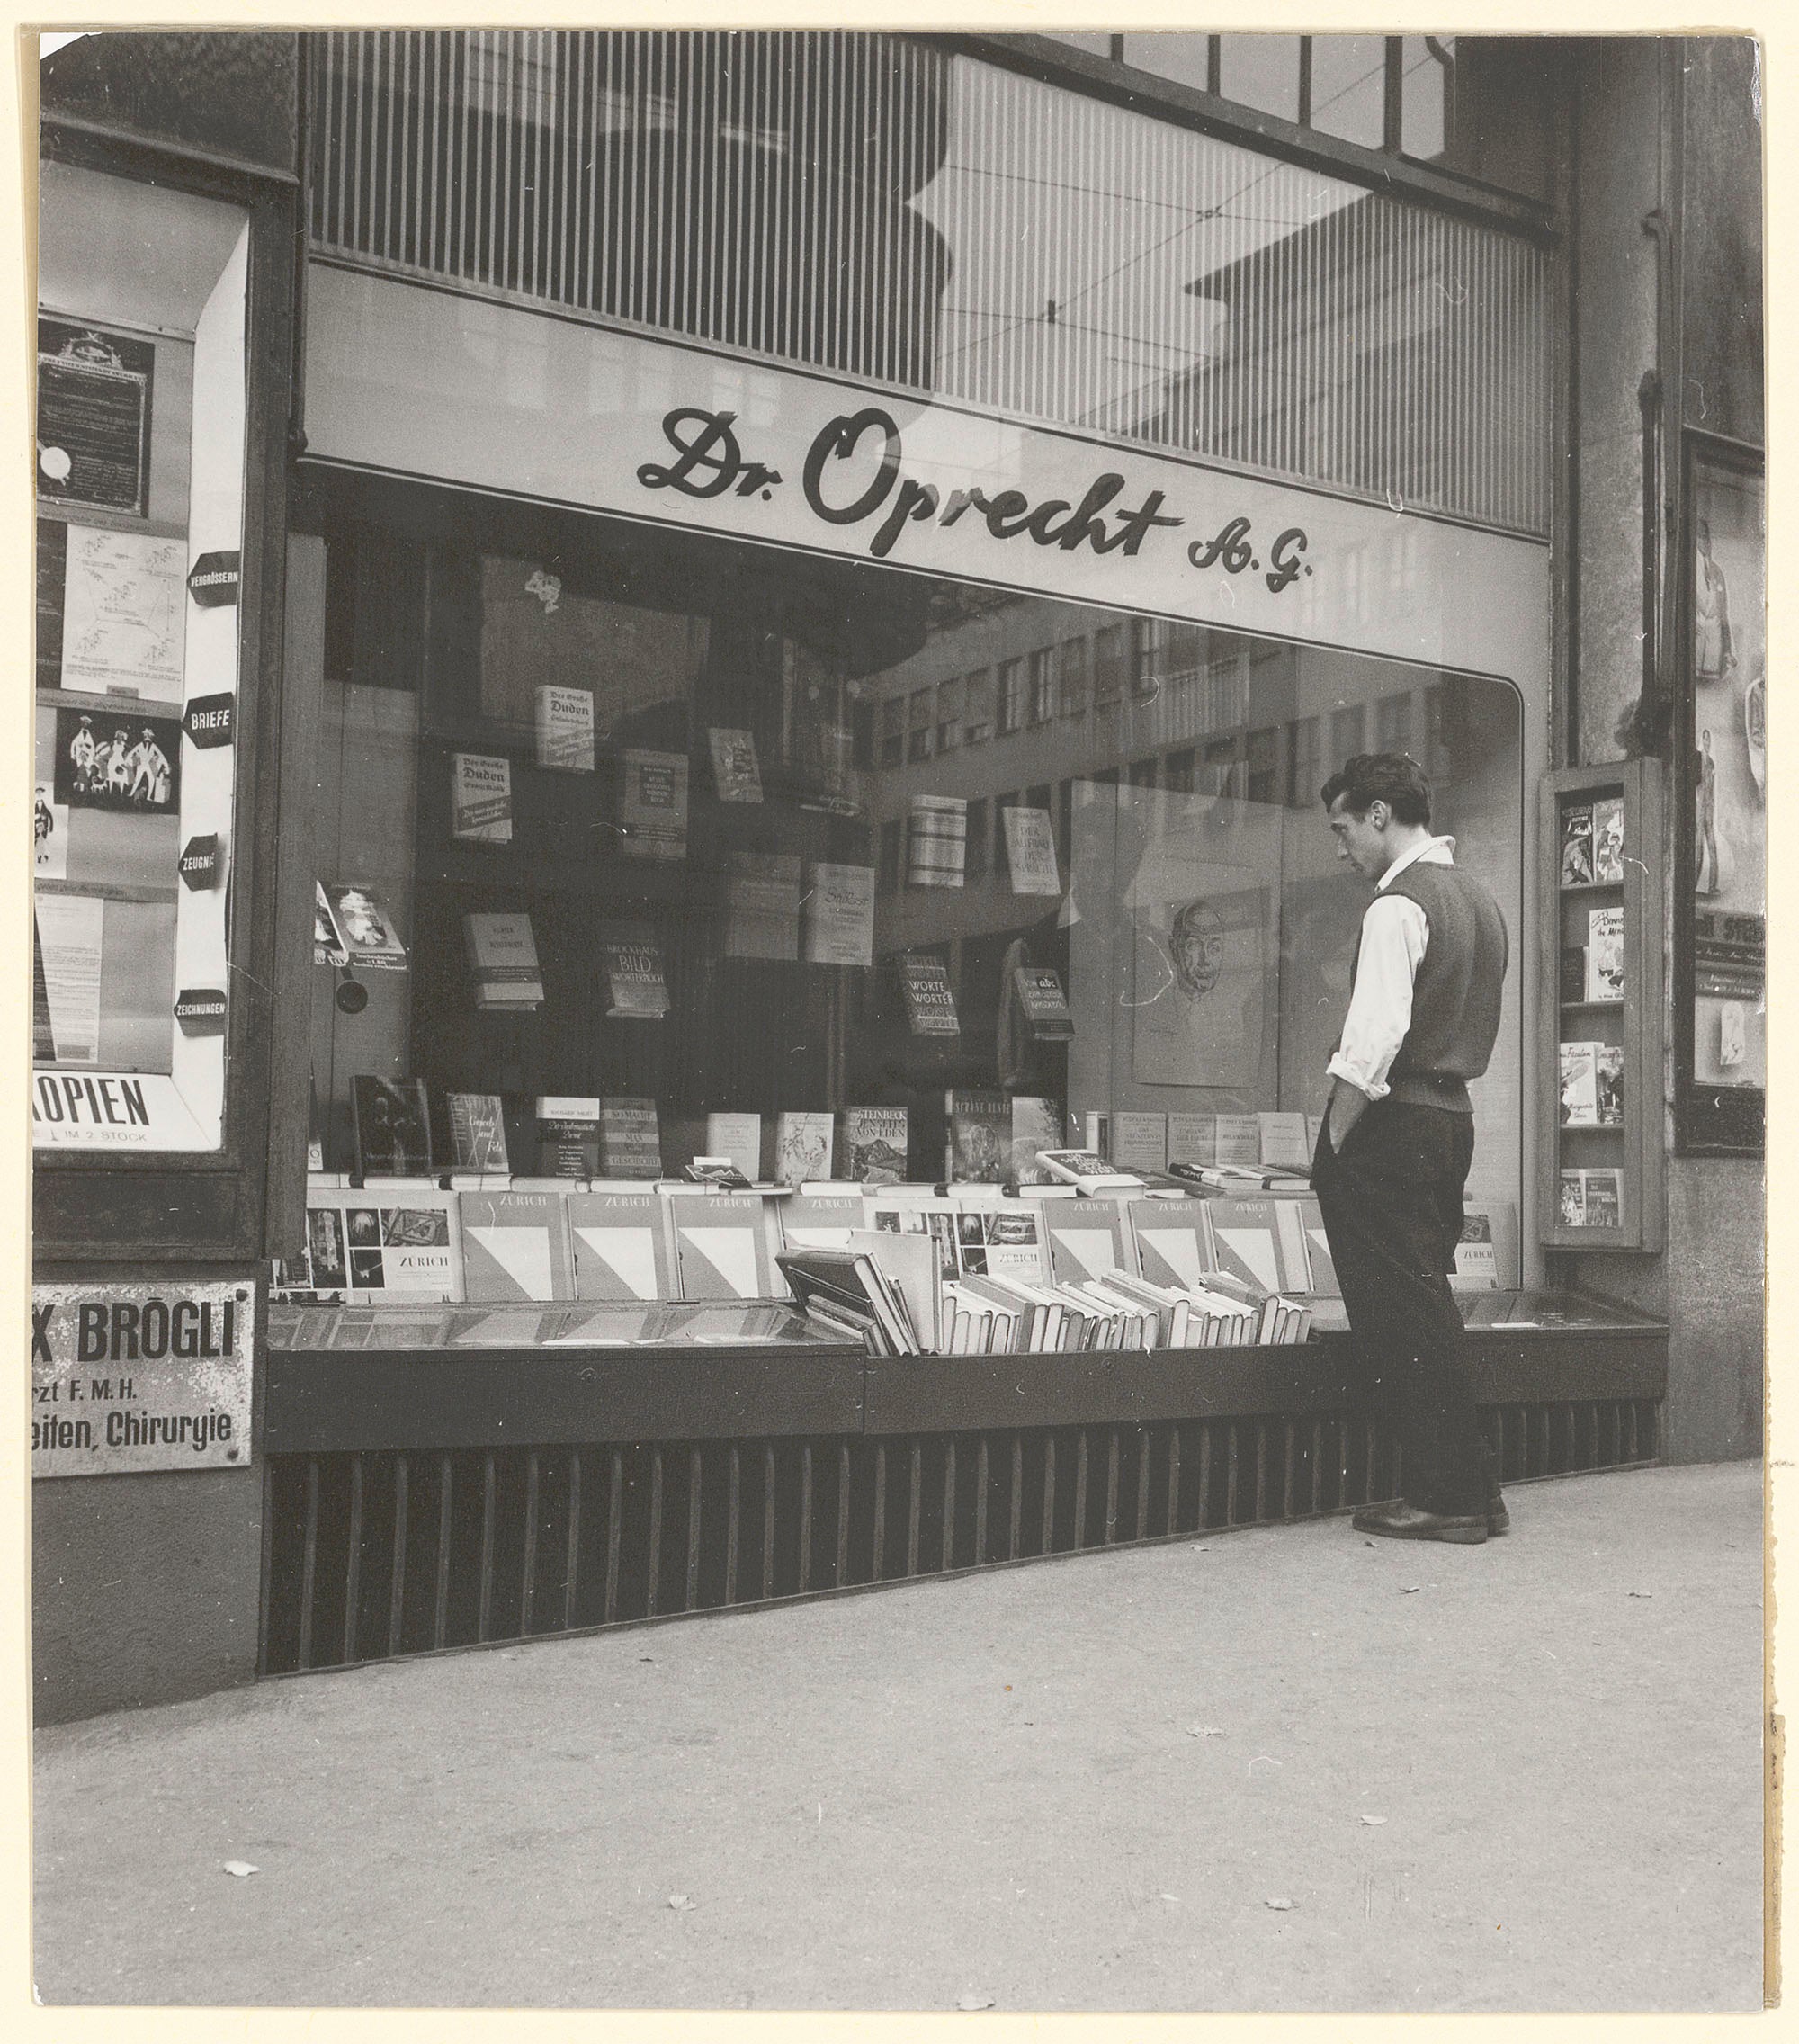 The exterior of Dr Oprecht’s bookshop in the 1930s&nbsp;